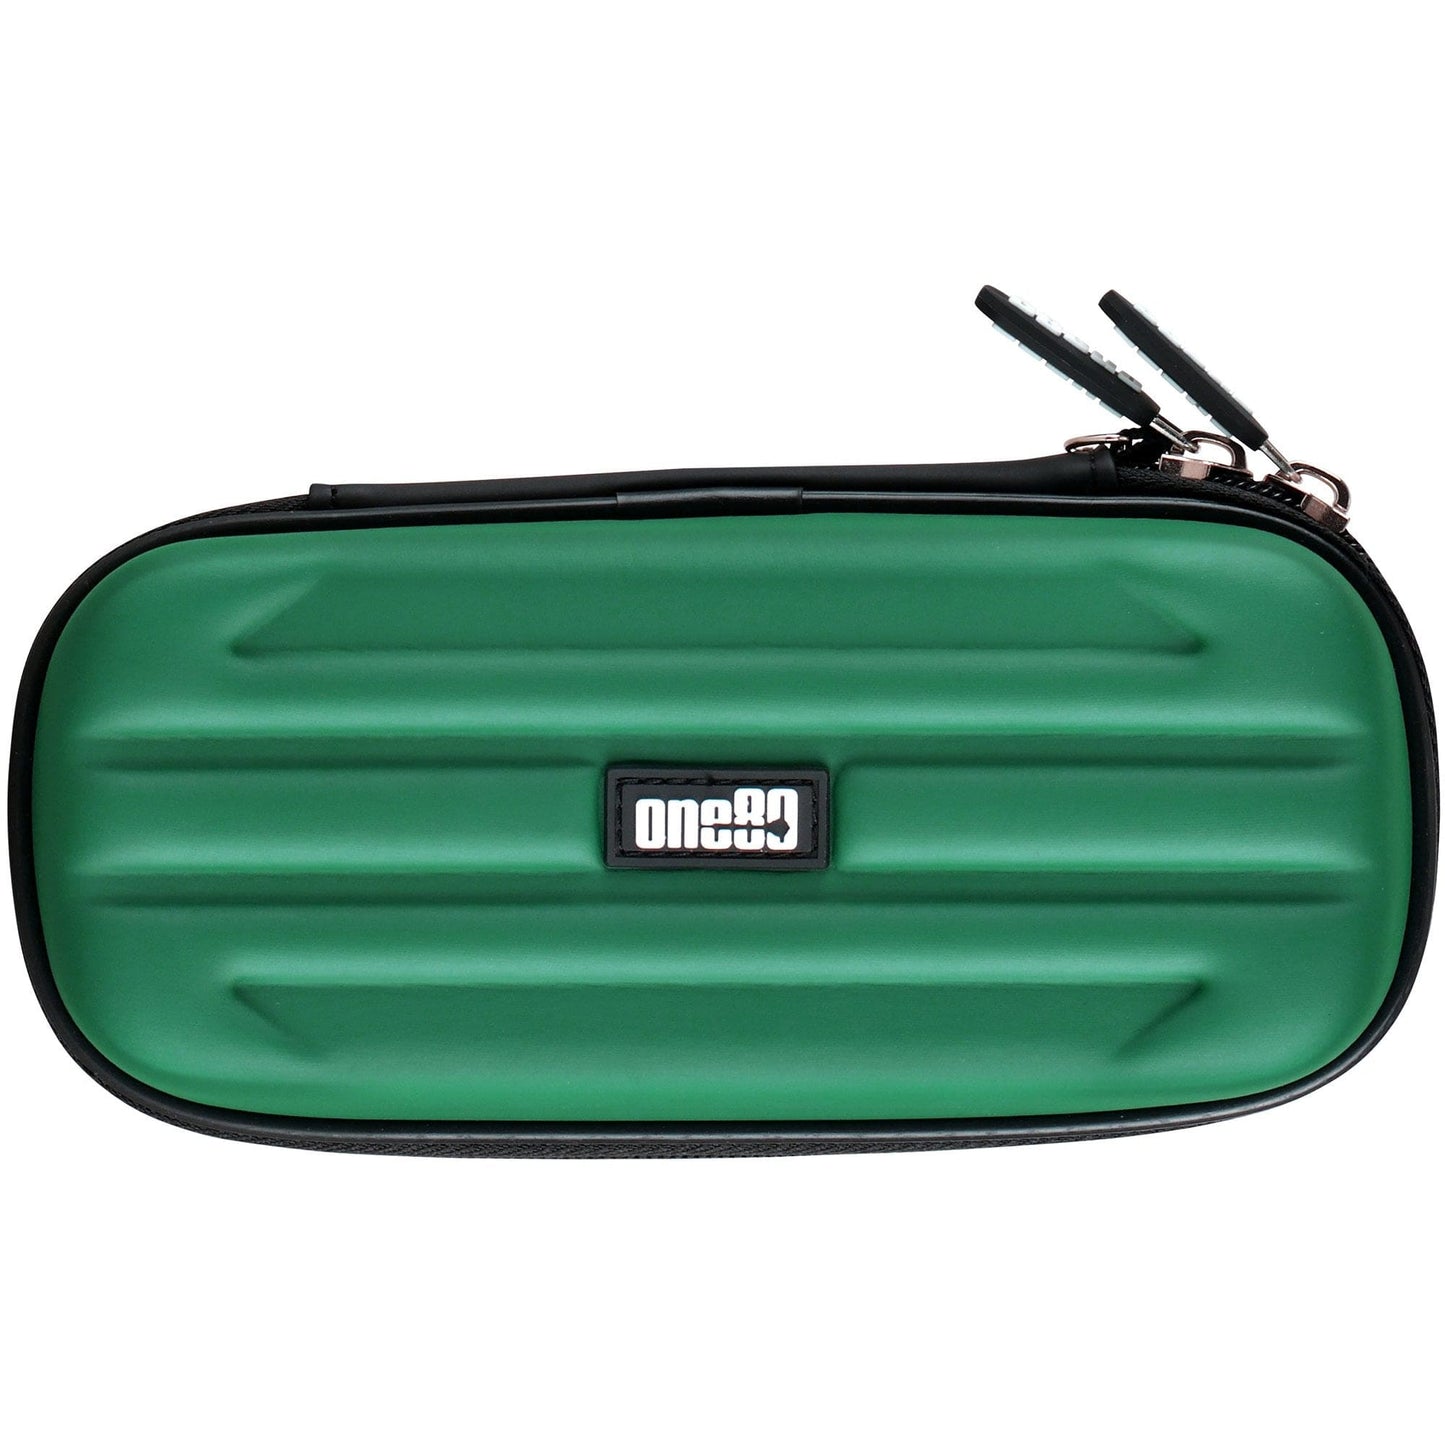 One80 Shard Mini Dart Case - Strong EVA Material - Colours Green